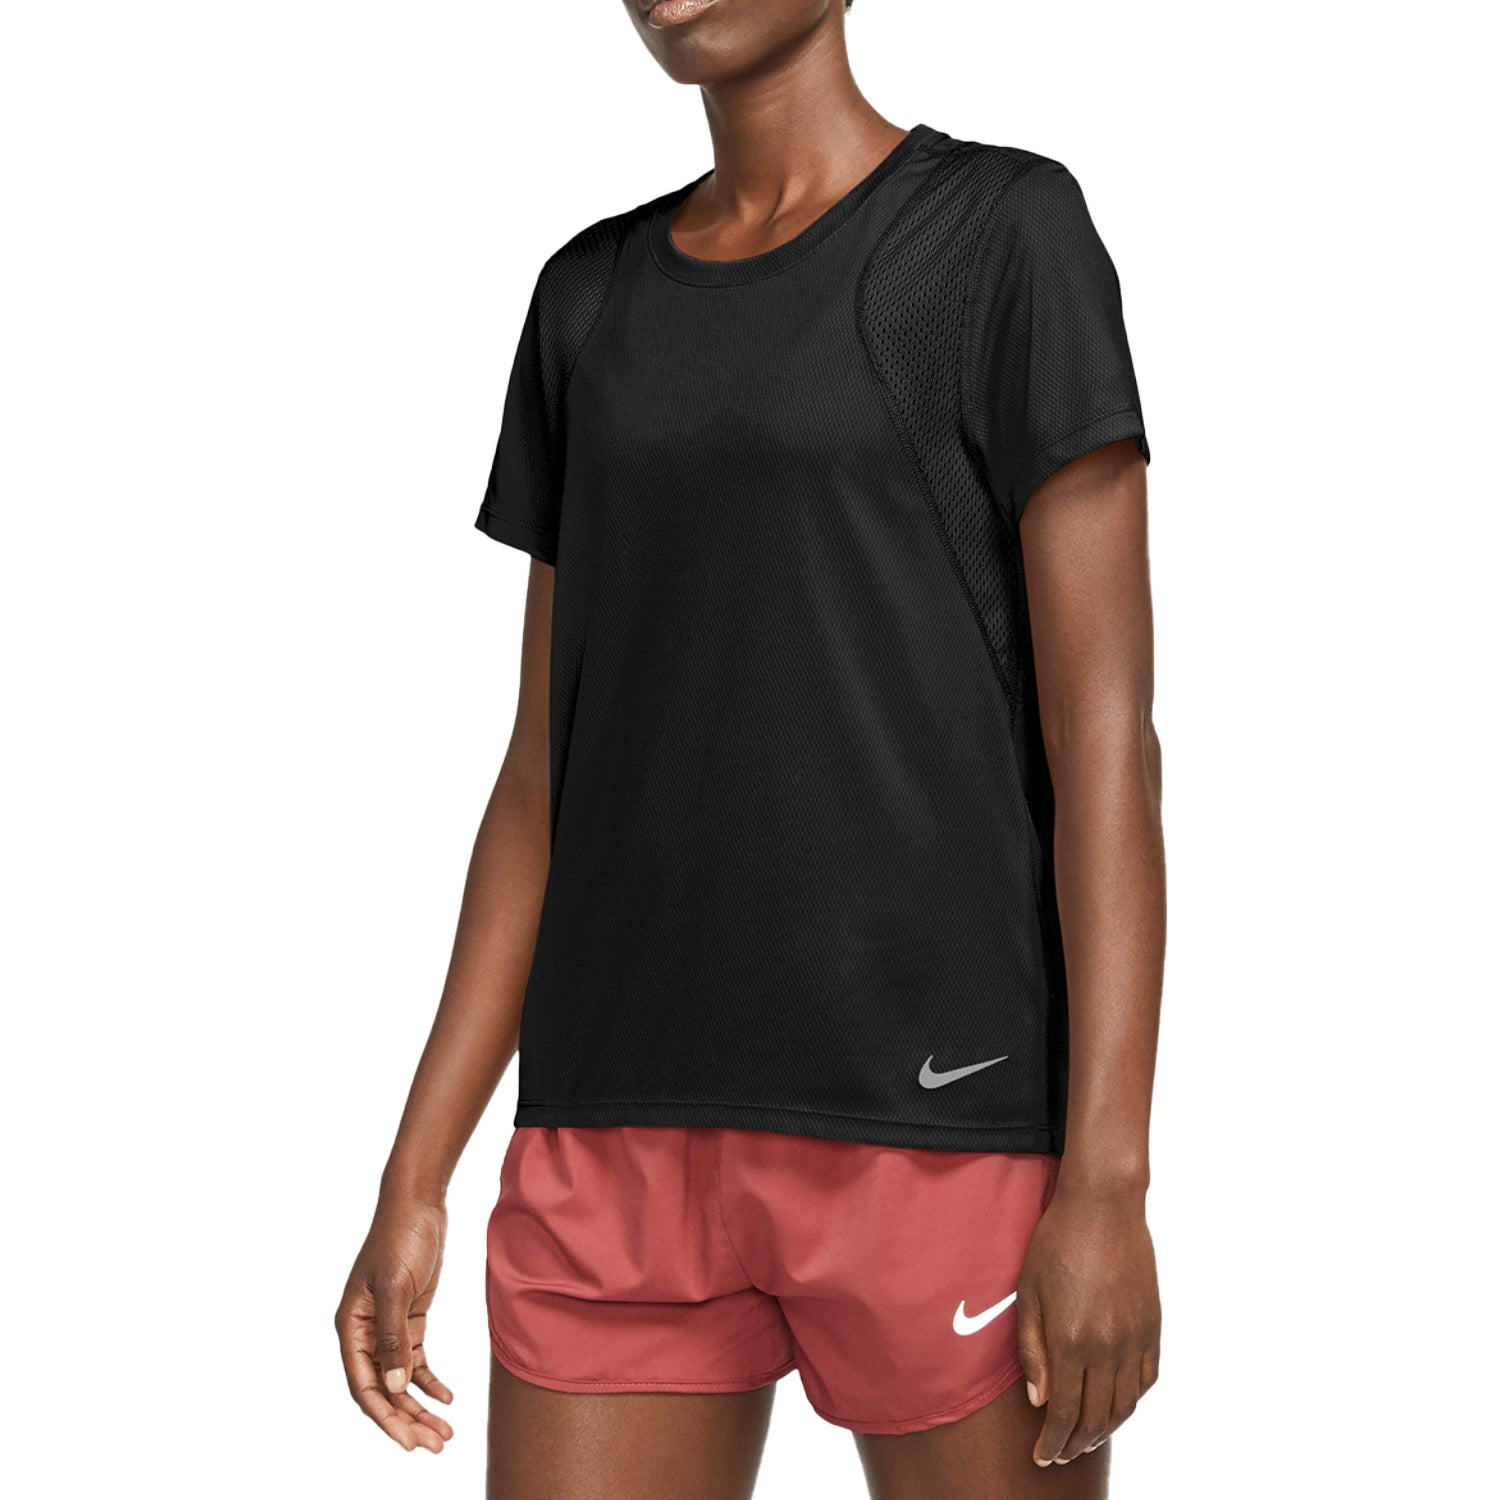 Nike Short-sleeve Running Top Womens Style : 890353